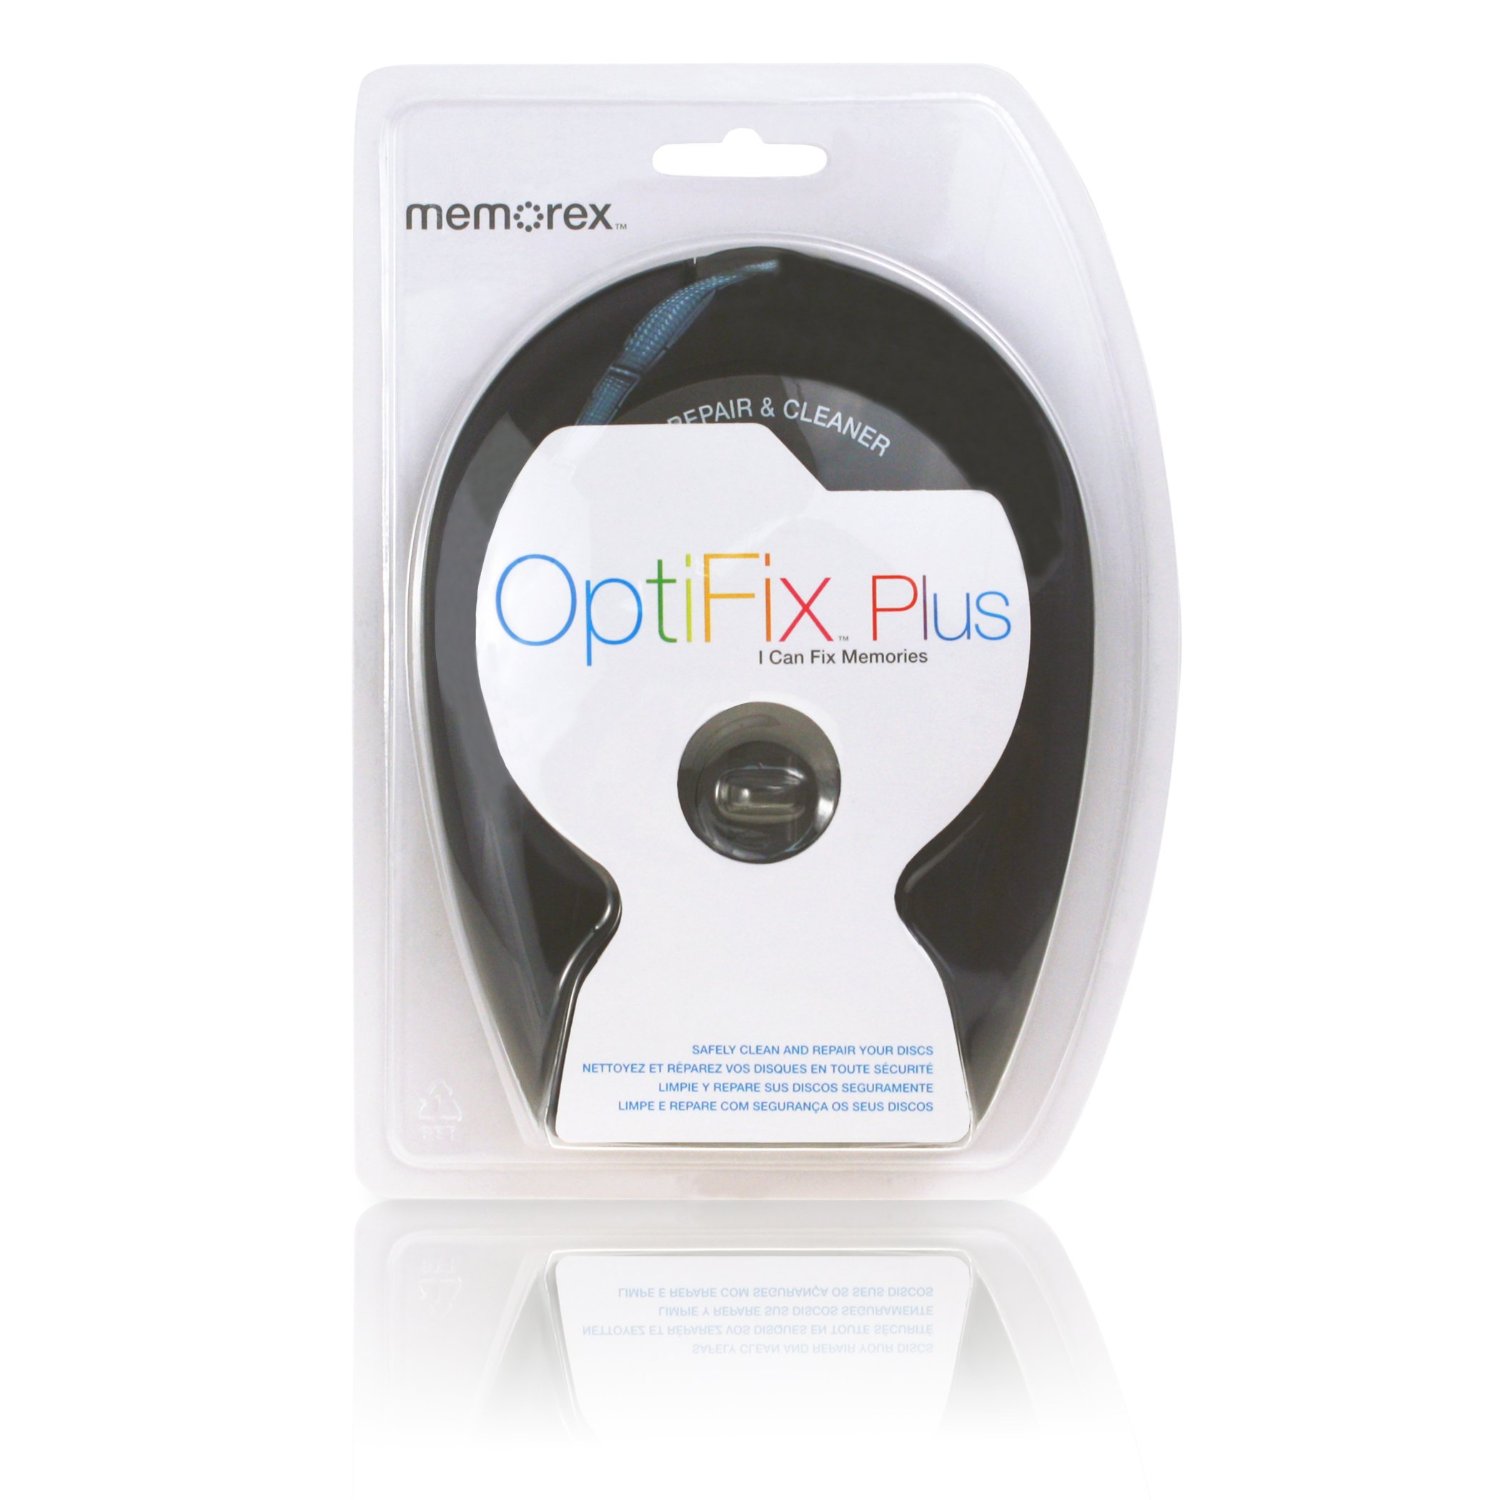  Memorex OptiFix Pro Motorized CD/DVD Scratch Repair Kit for  CD/DVD Music, Movies, Game Discs : Electronics